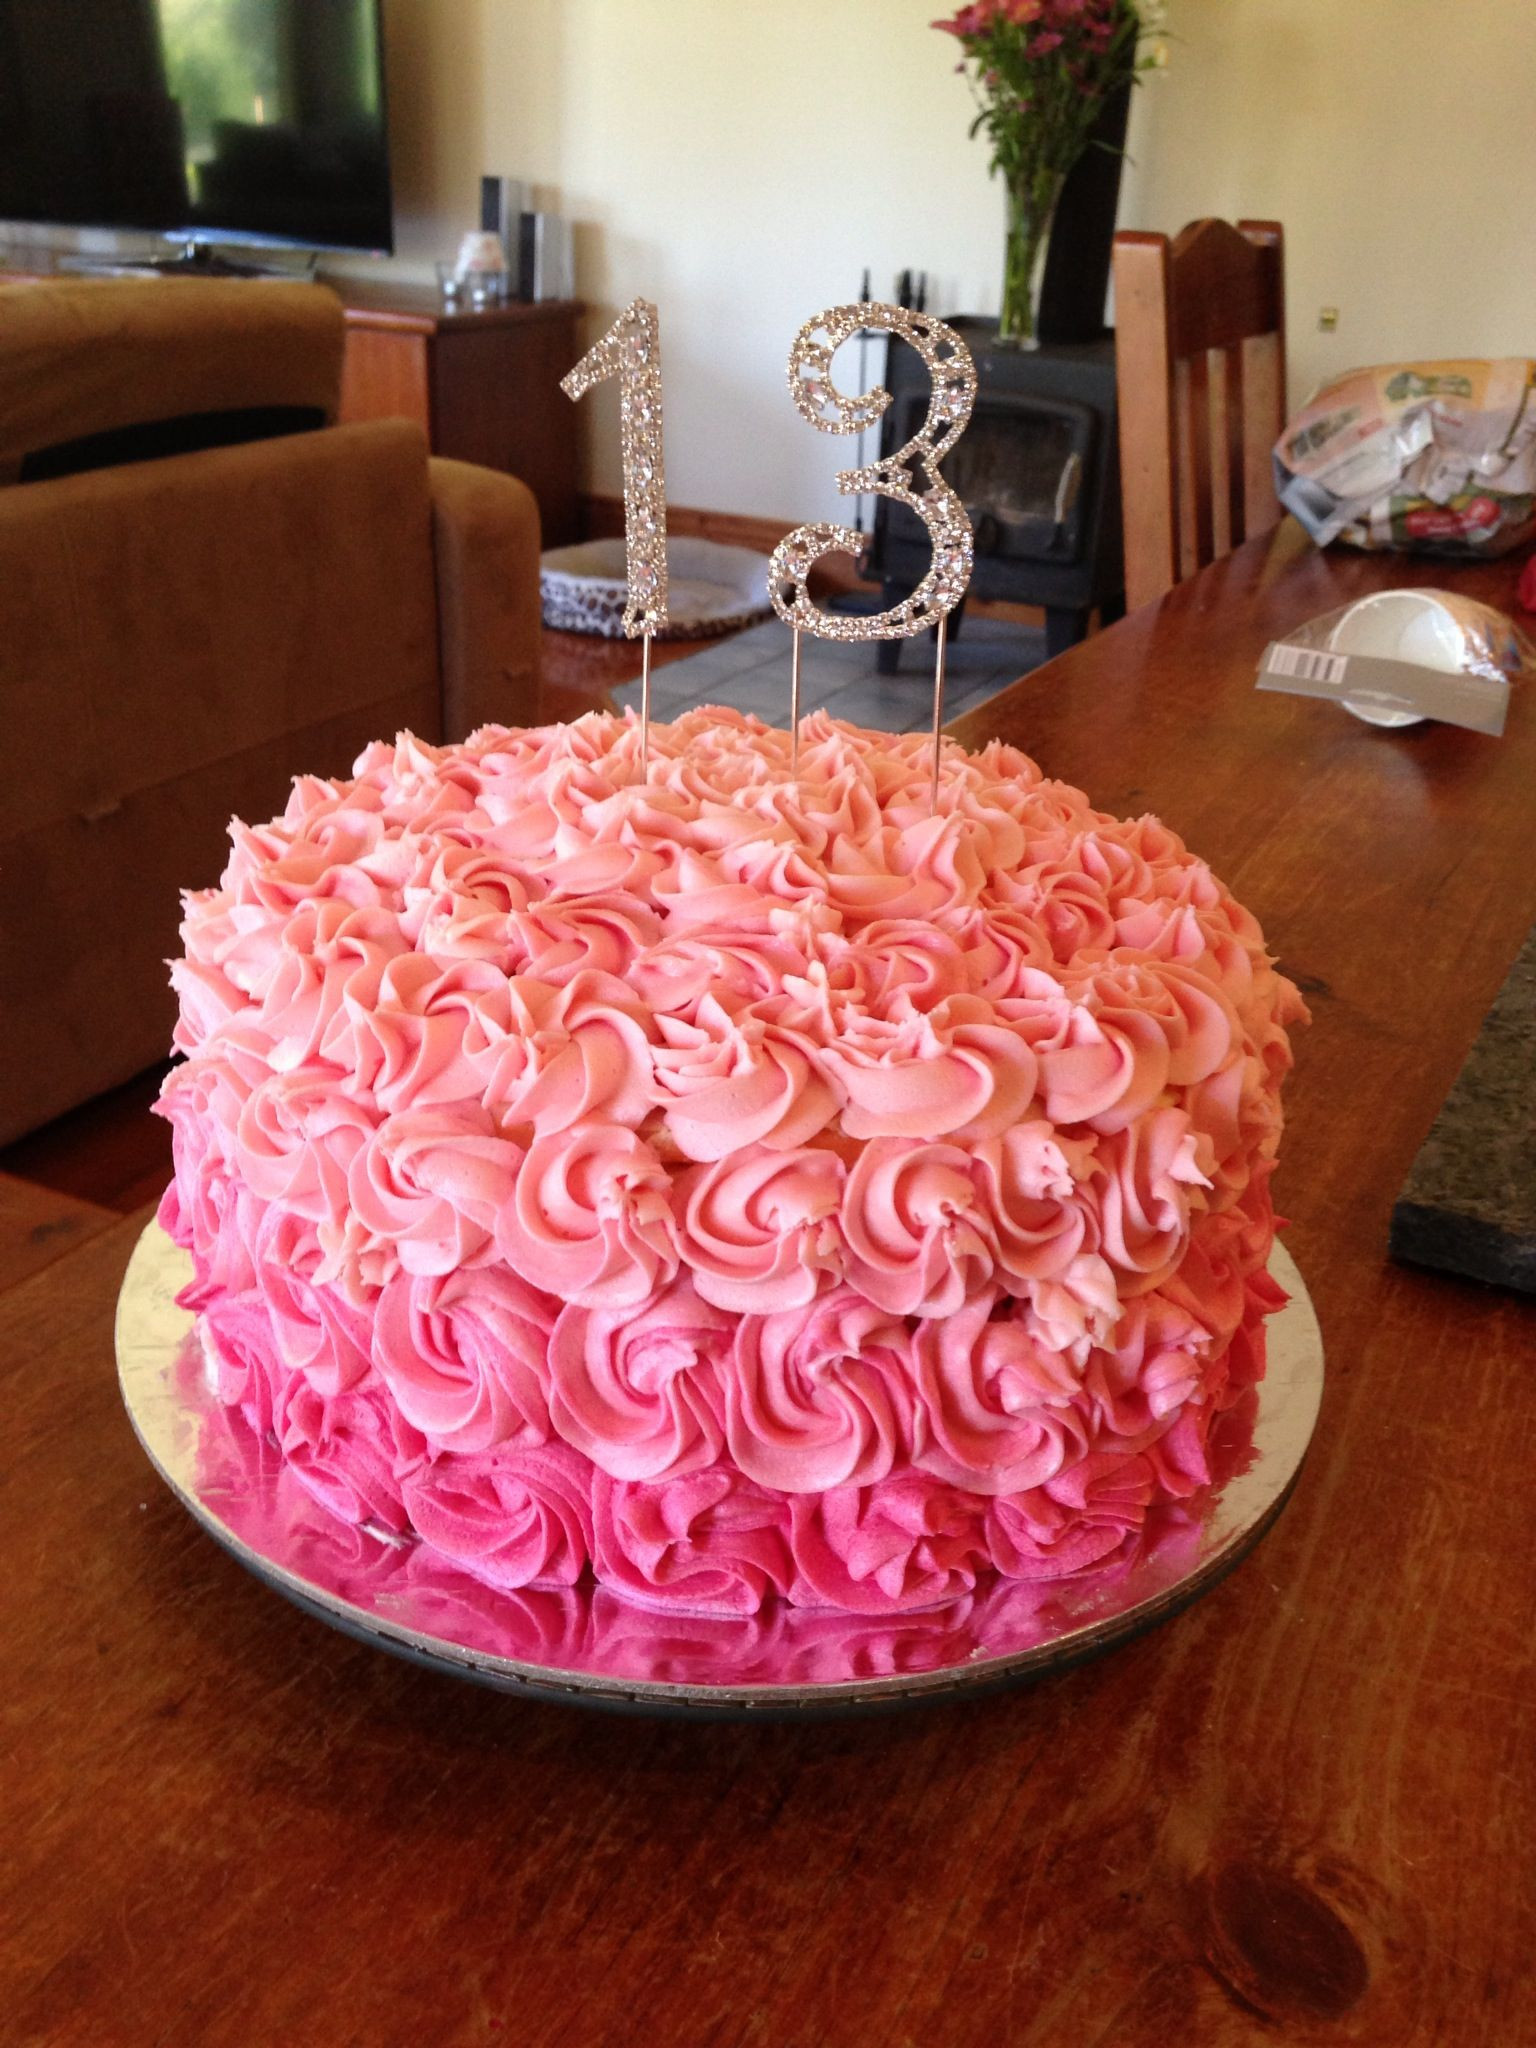 13th Birthday Cake Ideas
 Millie s 13th birthday cake